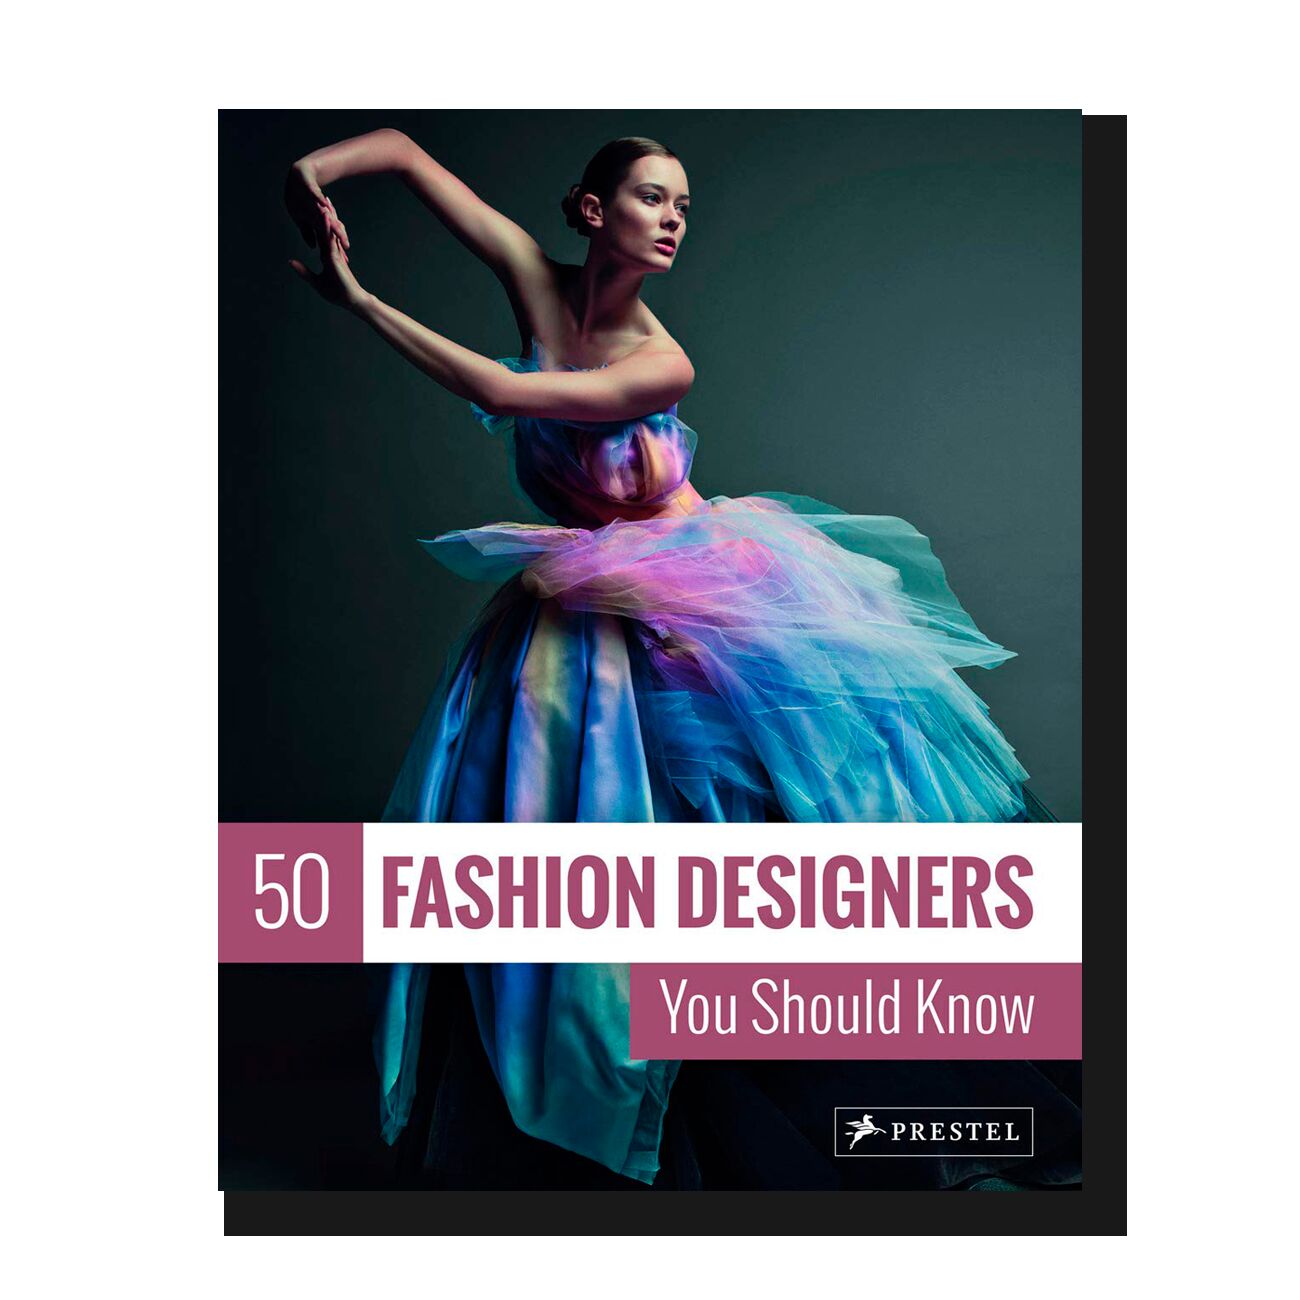 50 Fashion Designers You Should Know